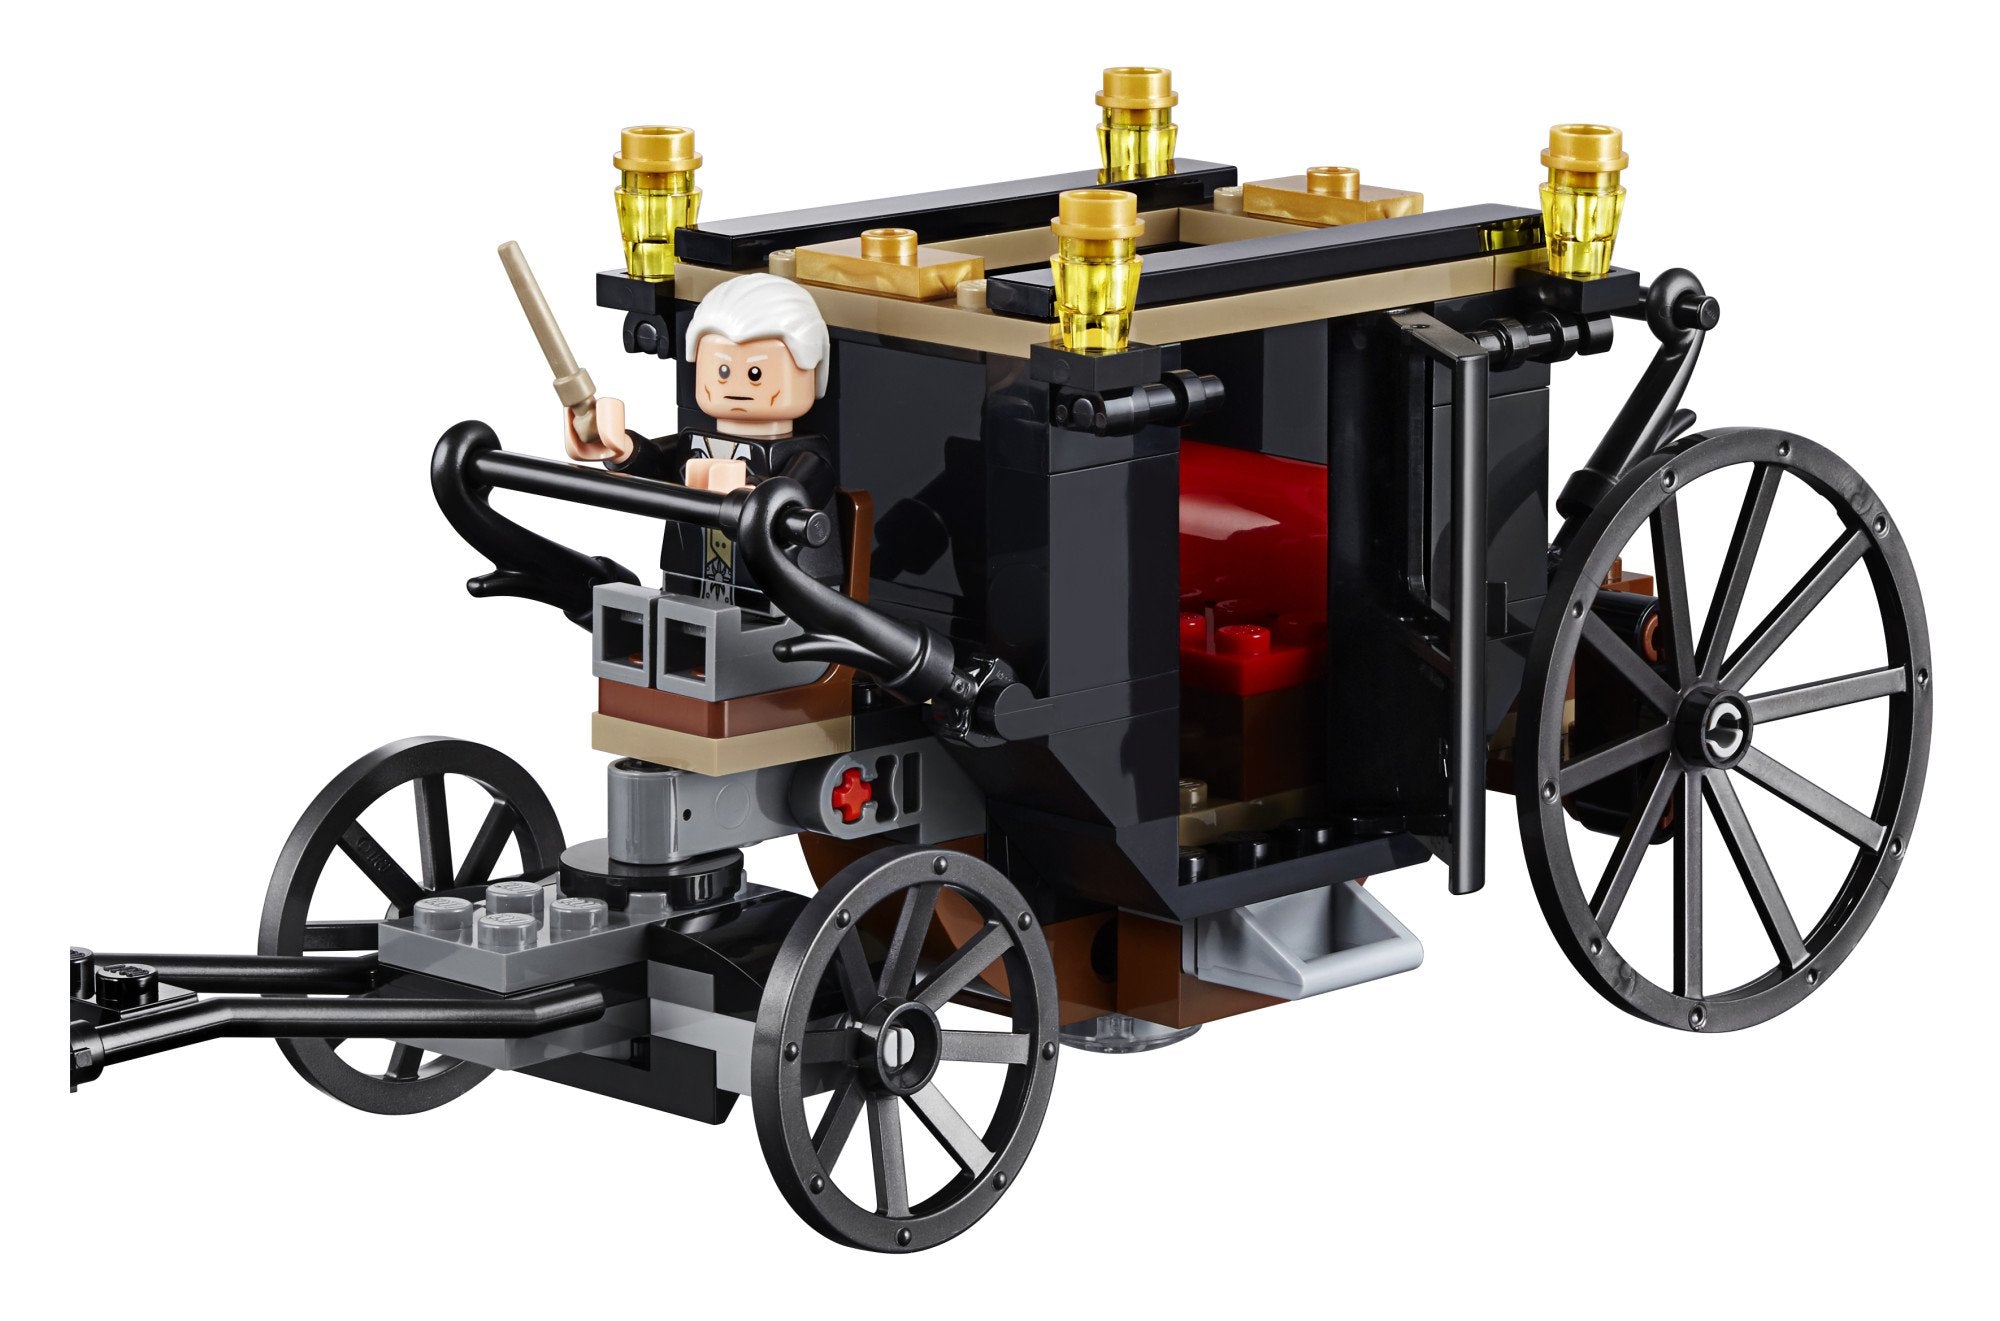 LEGO Harry Potter Grindelwalds Escape 75951 Building Kit (132 Piece), Multicolor (Like New, Open Box)